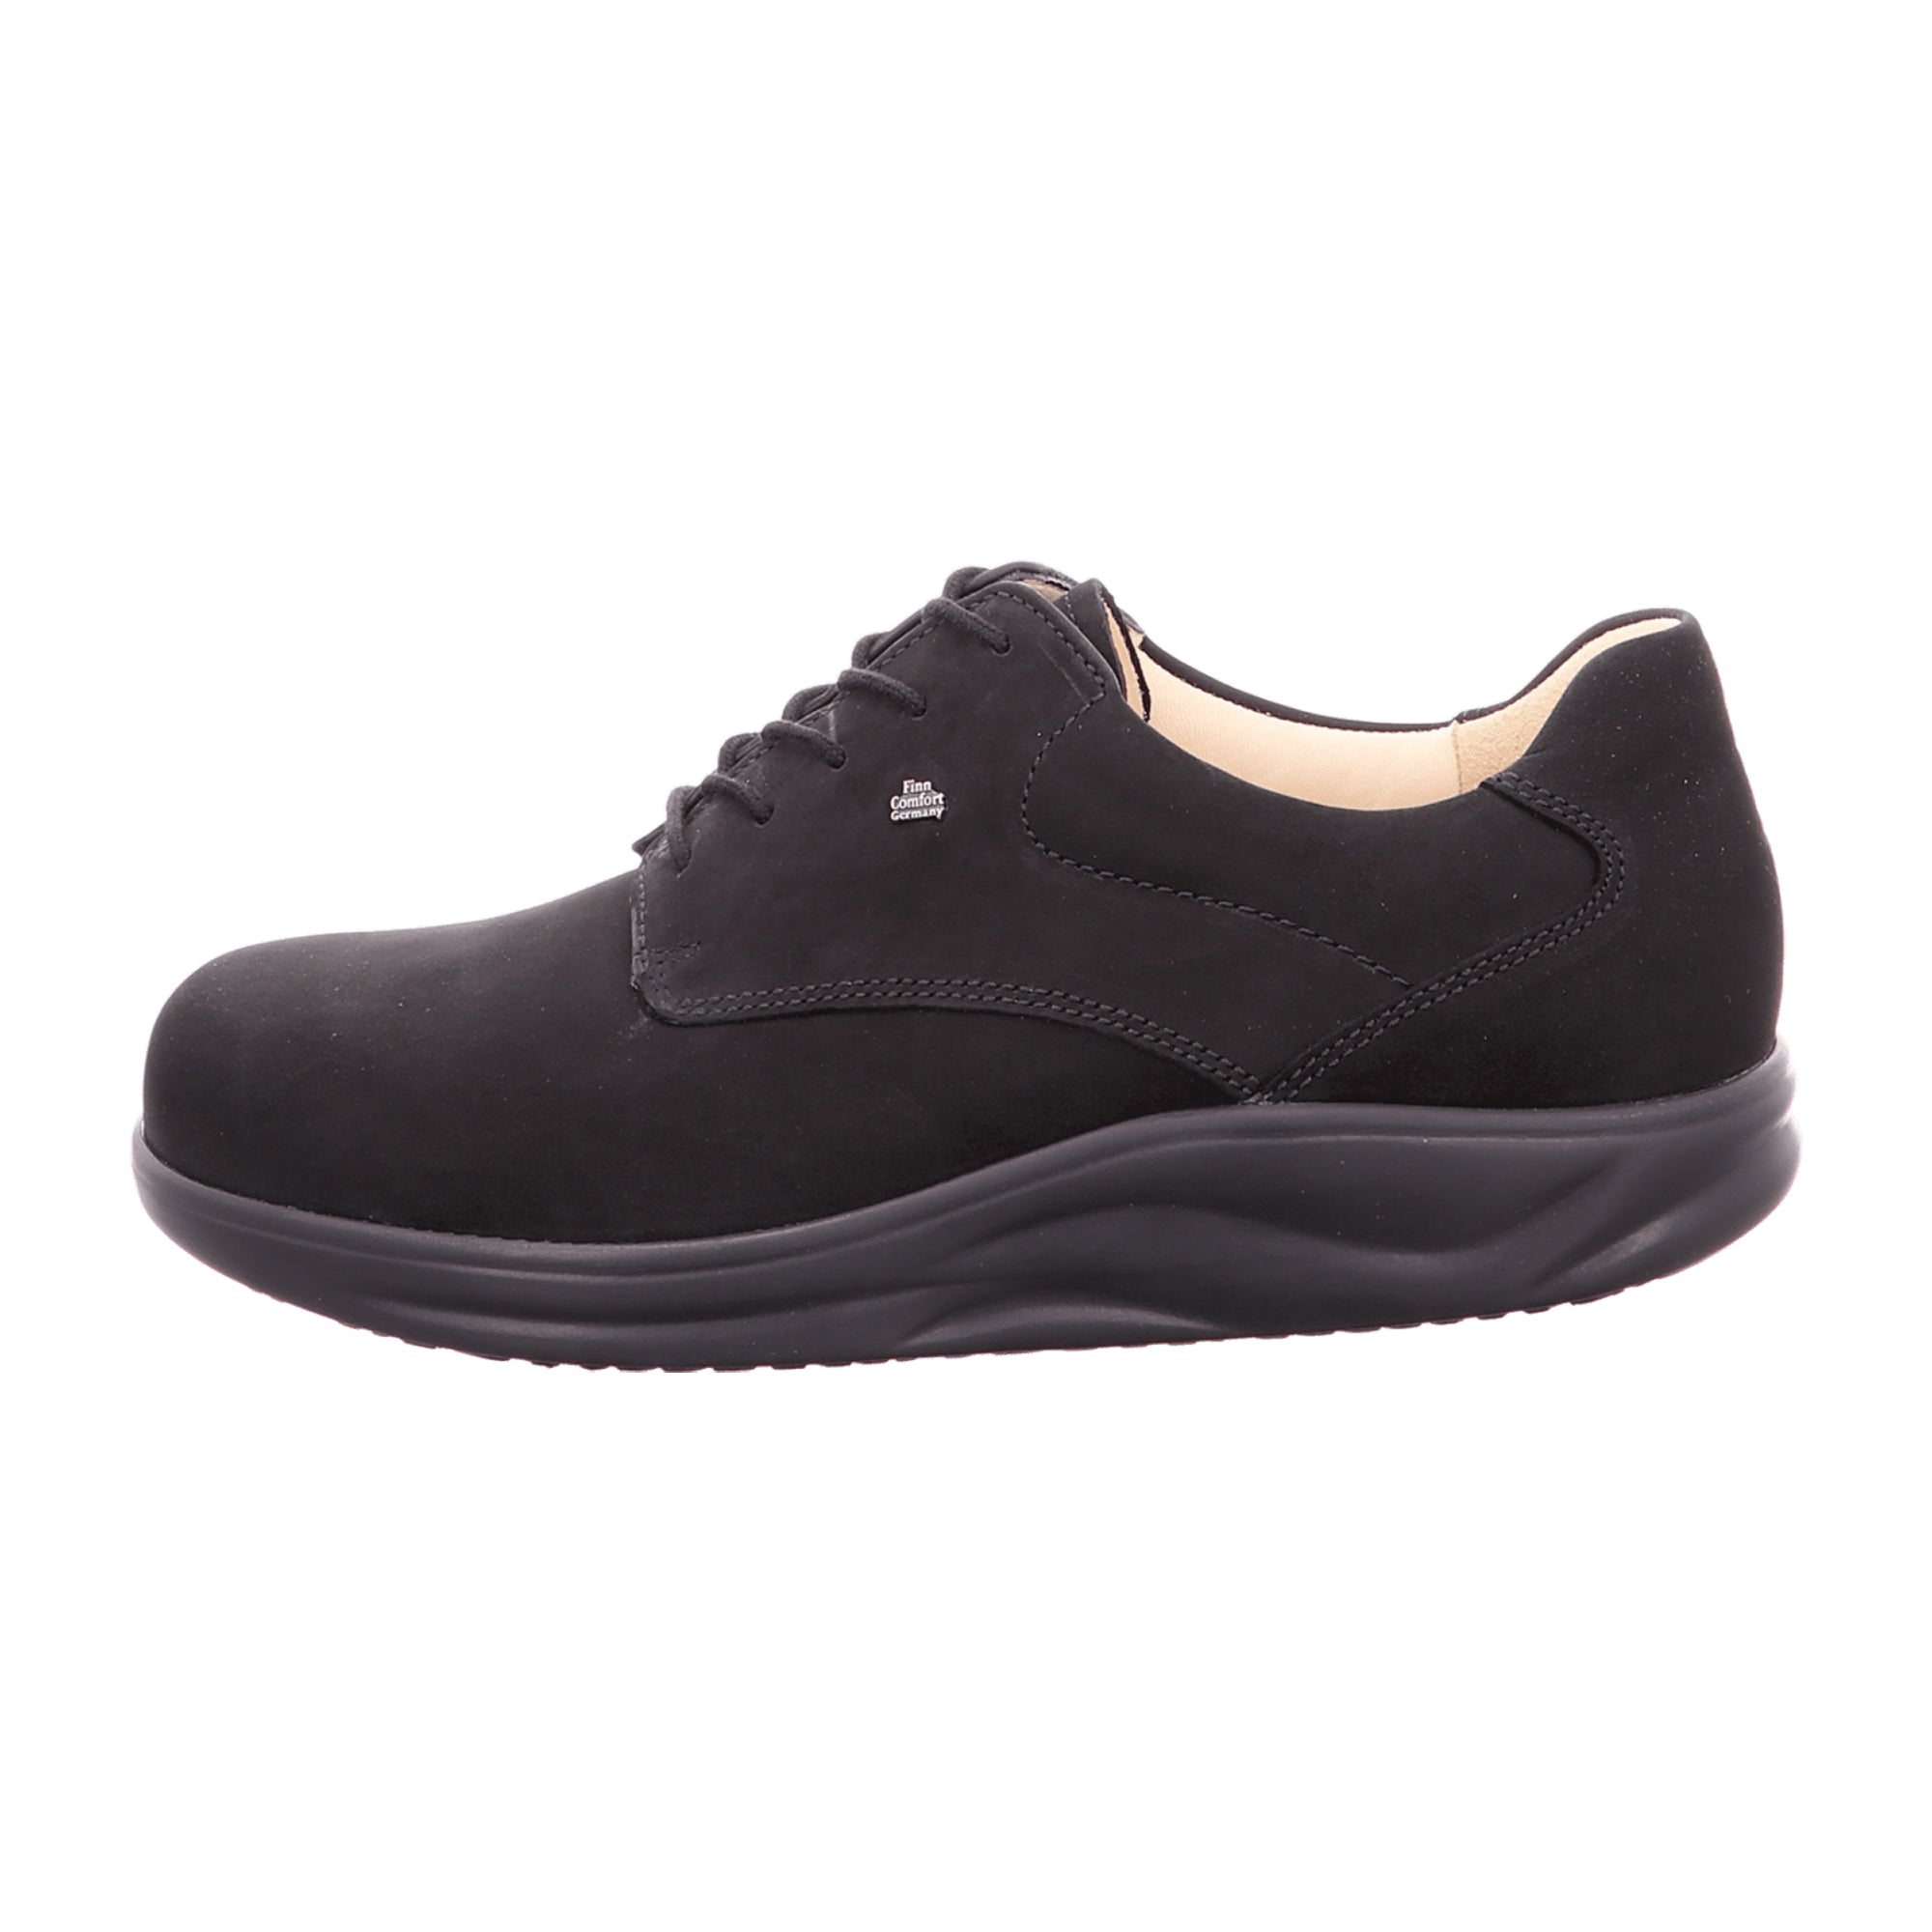 Finn Comfort Pretoria Men's Black Leather Shoes - Comfortable & Stylish